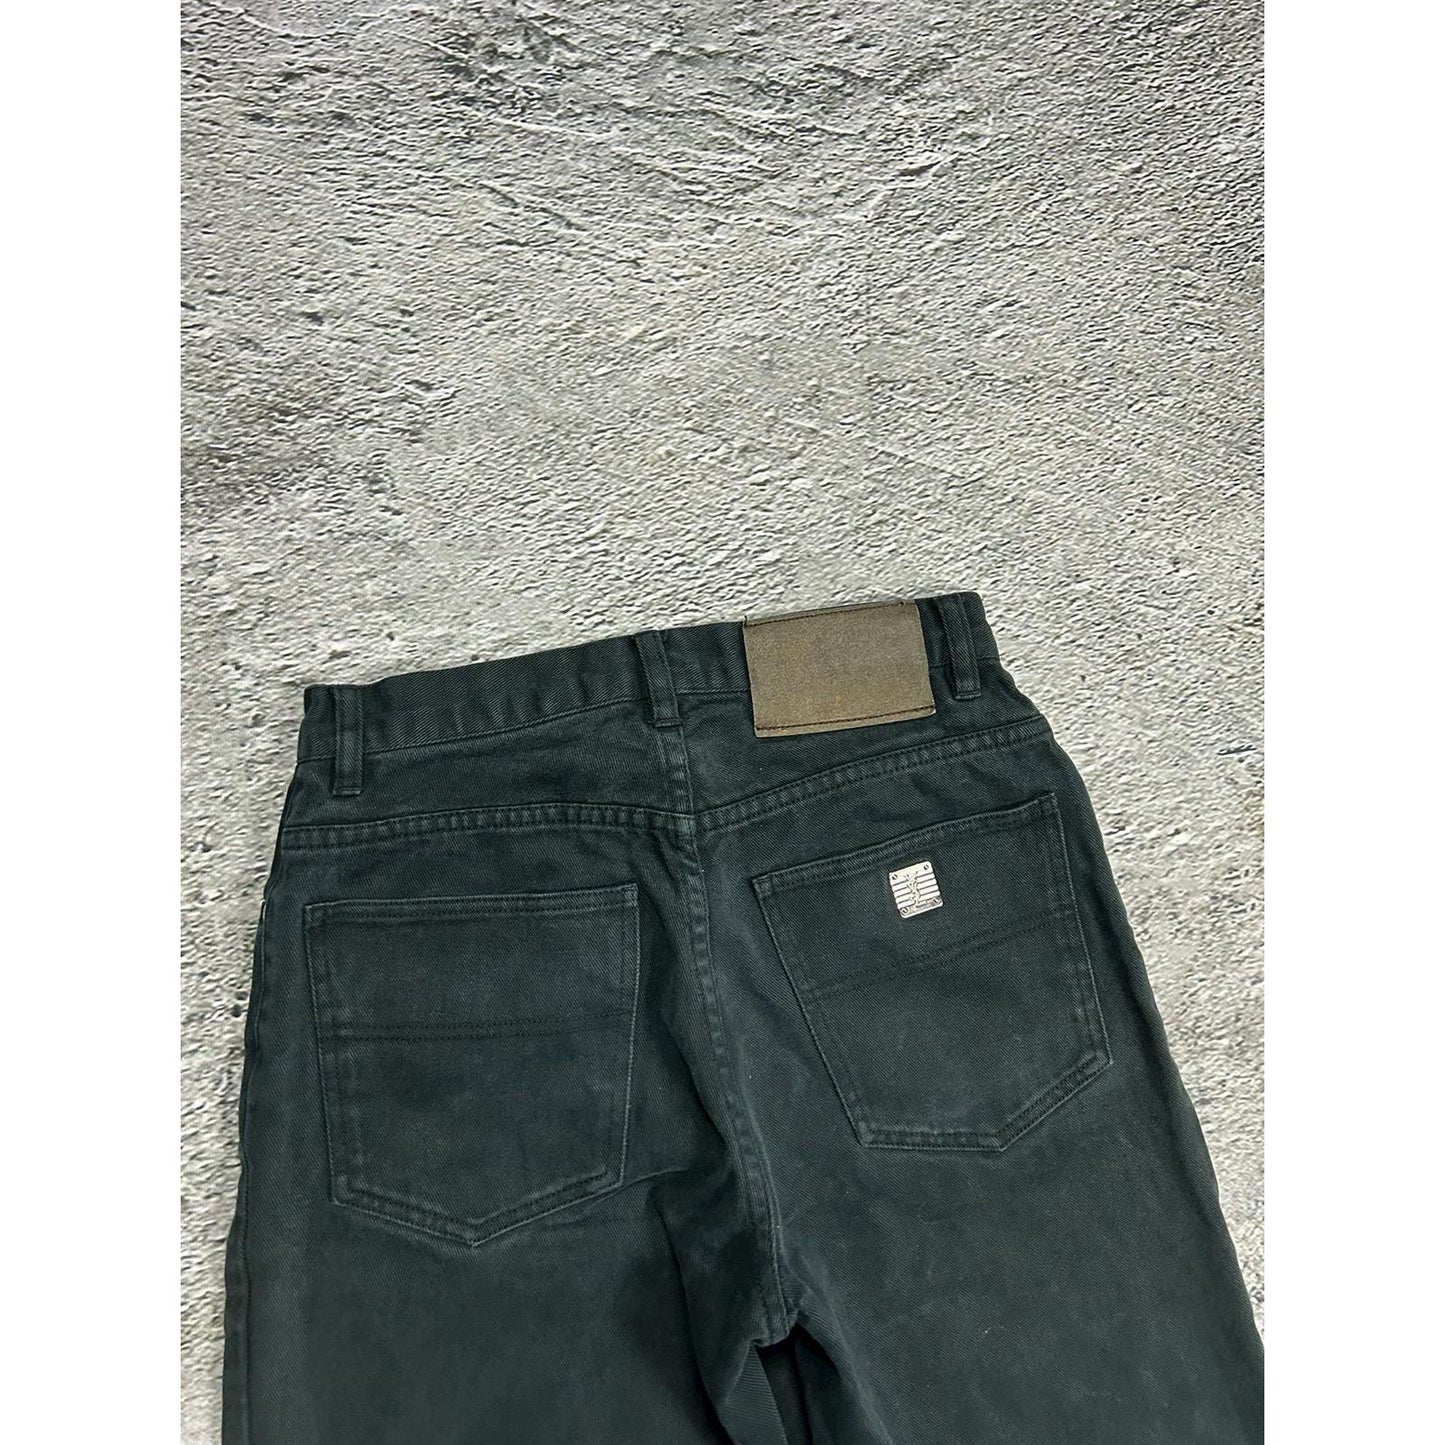 YSL vintage jeans black / dark green Yves Saint Laurent 90s